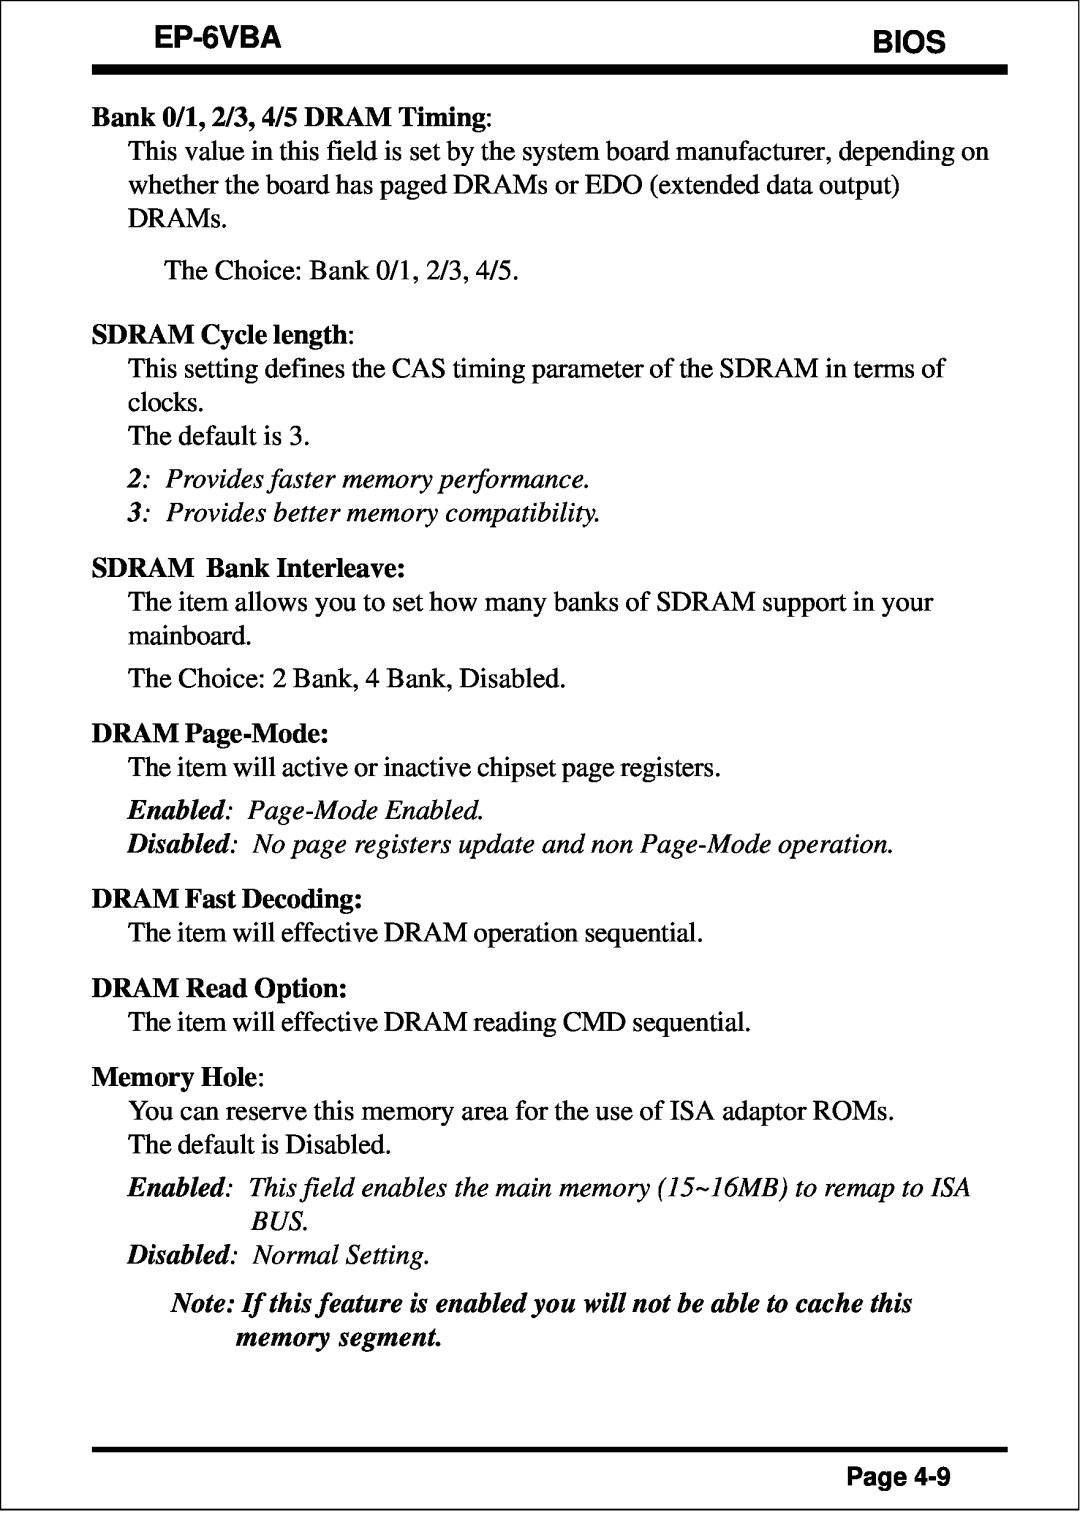 EPoX Computer EP-6VBA Bios, Bank 0/1, 2/3, 4/5 DRAM Timing, SDRAM Cycle length, SDRAM Bank Interleave, DRAM Page-Mode 